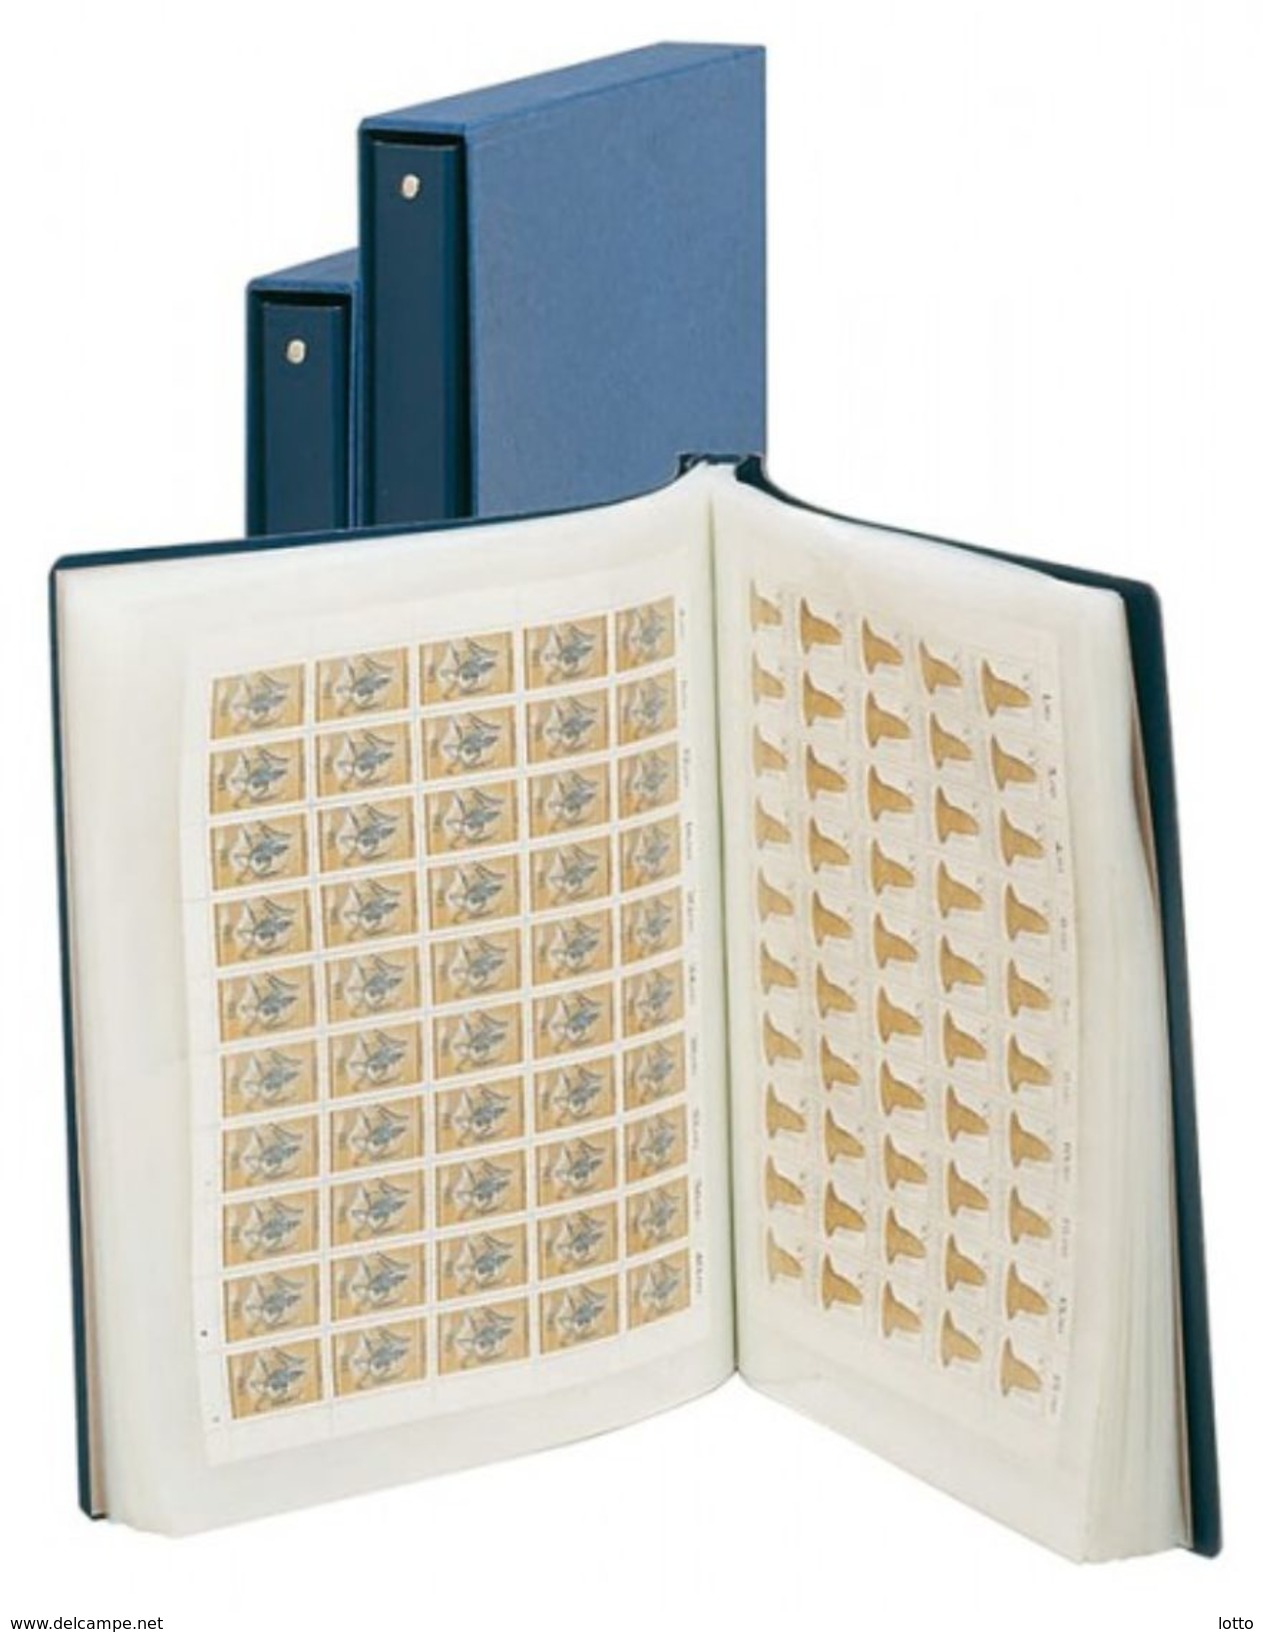 Lindner Bogenalbum, 280 X 385 X 32 Mm (ohne Kassette), Empf. VP 48,50 +++ NEU OVP +++ (861) - Alben Leer